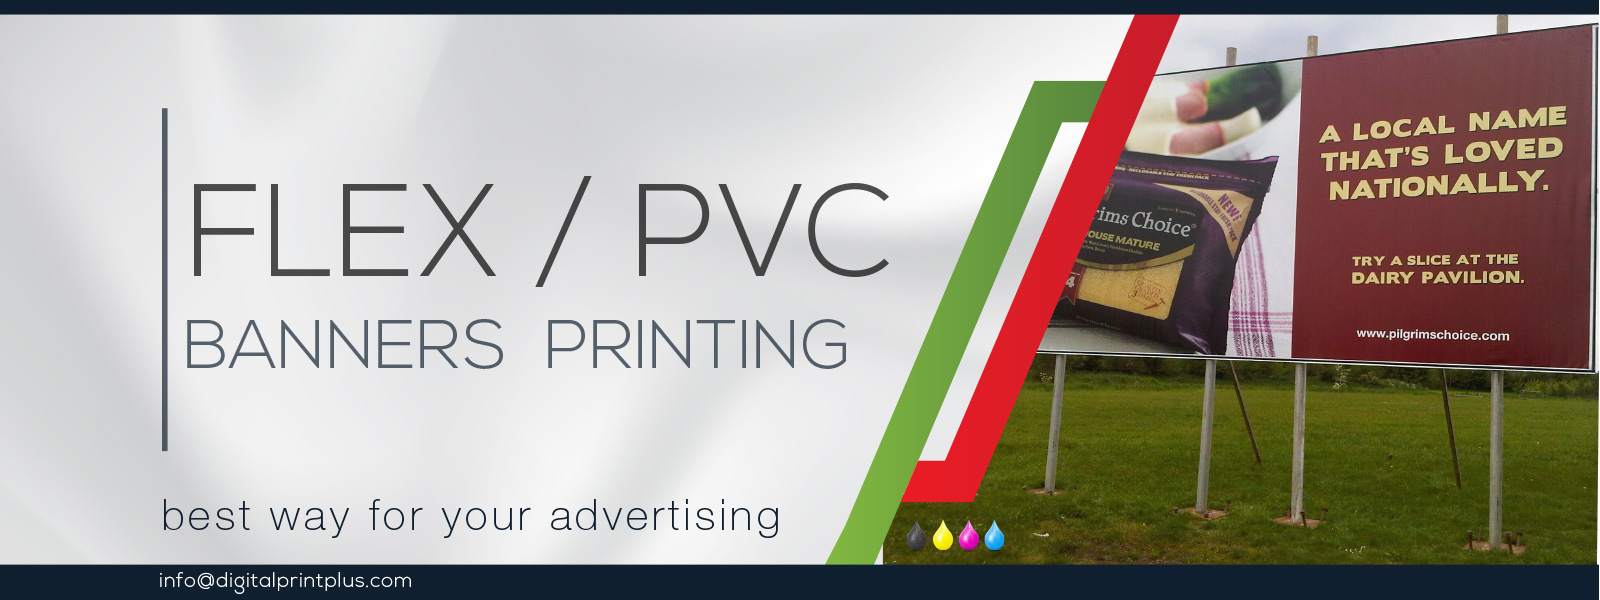 Flex PVC Banners Printing